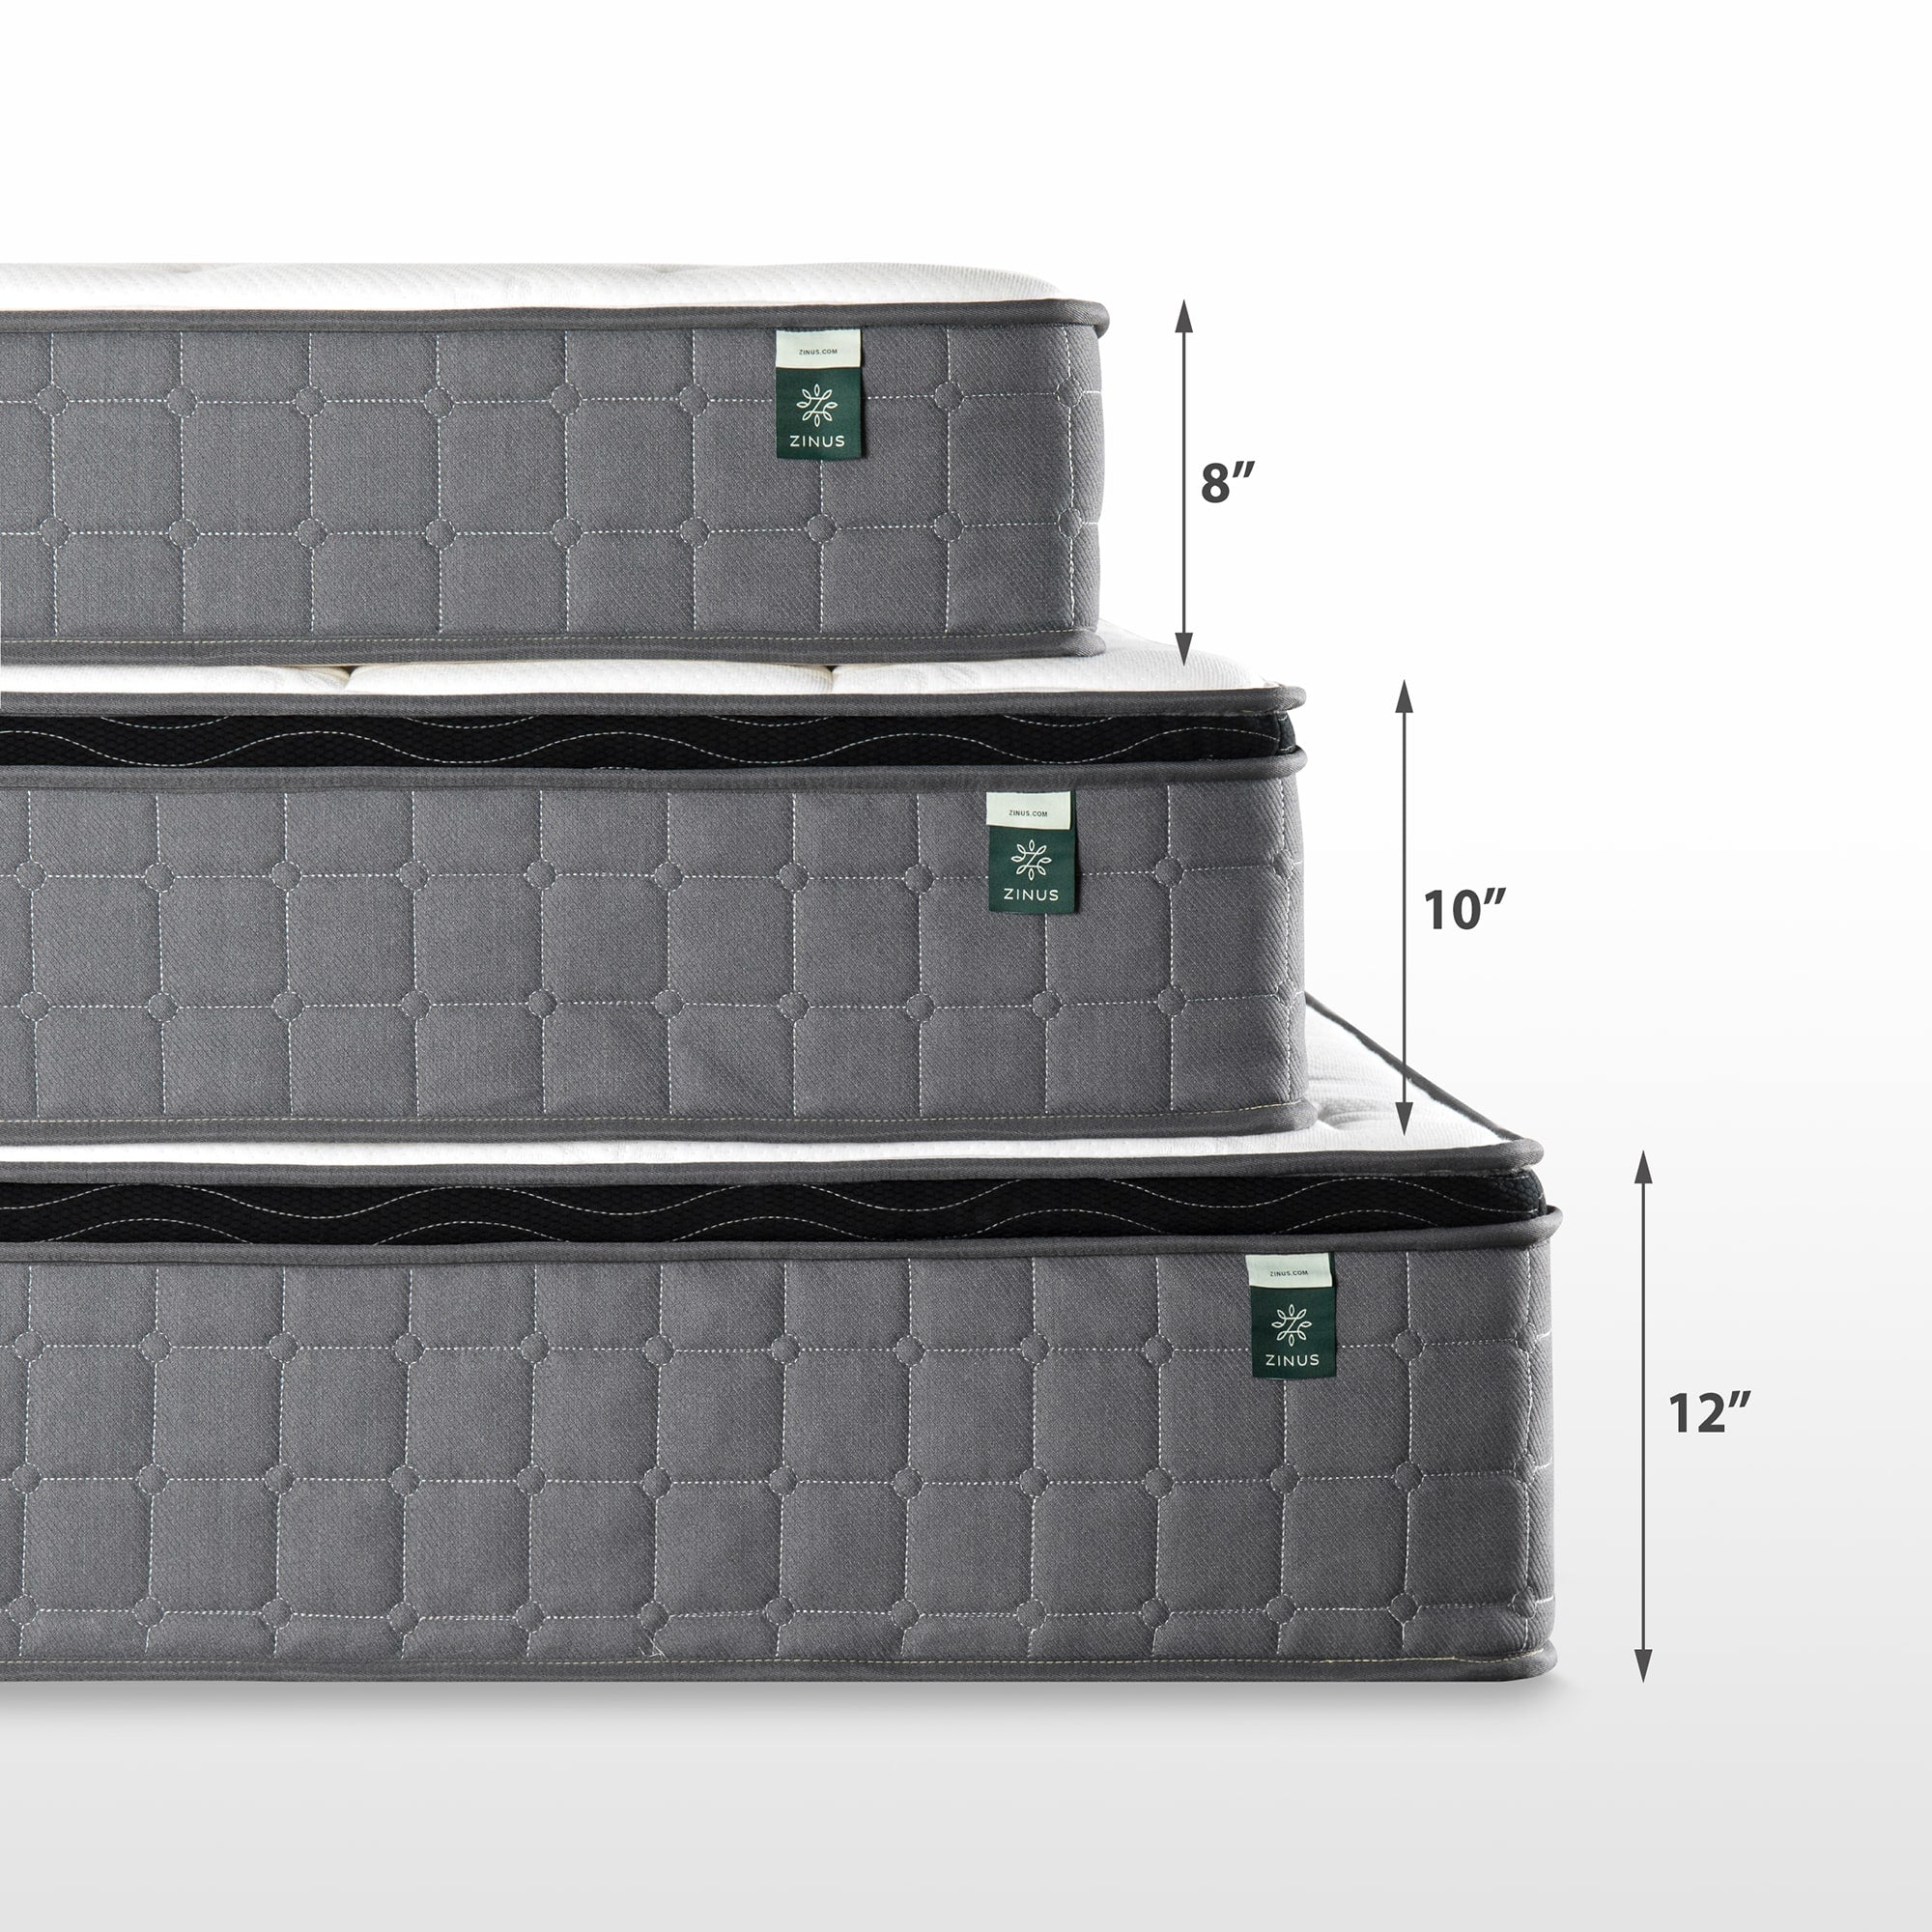 Cool Touch Comfort Gel Memory Foam Hybrid Mattress profile heights